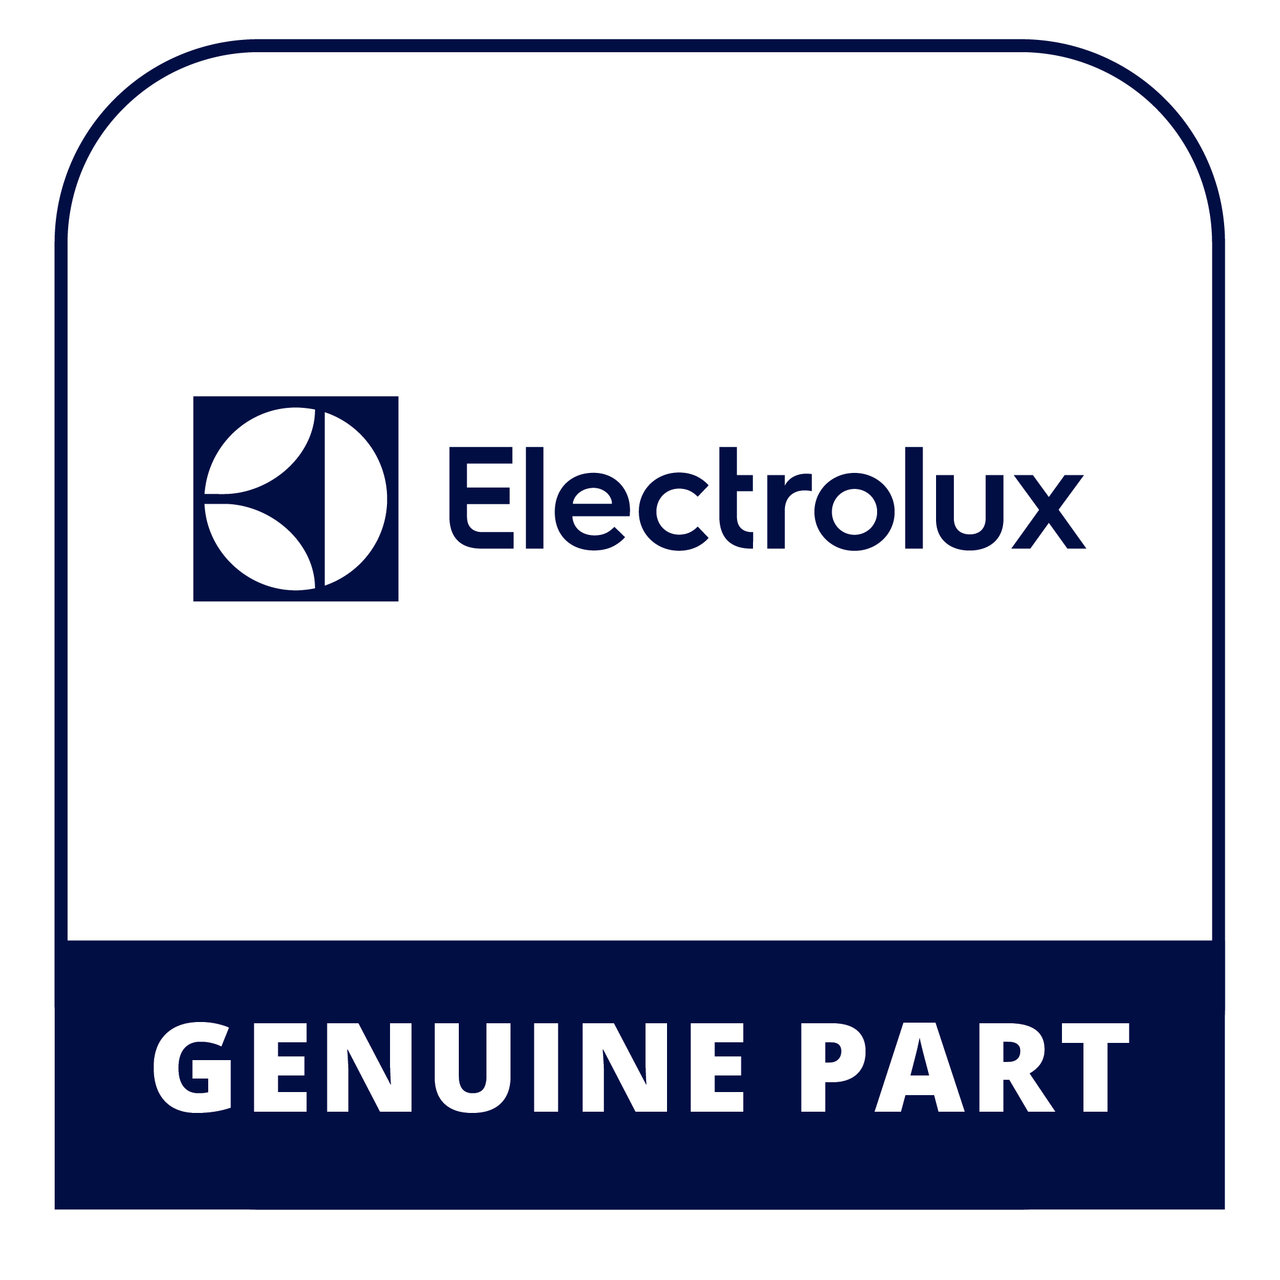 Frigidaire - Electrolux 5304433252 Label - Genuine Electrolux Part